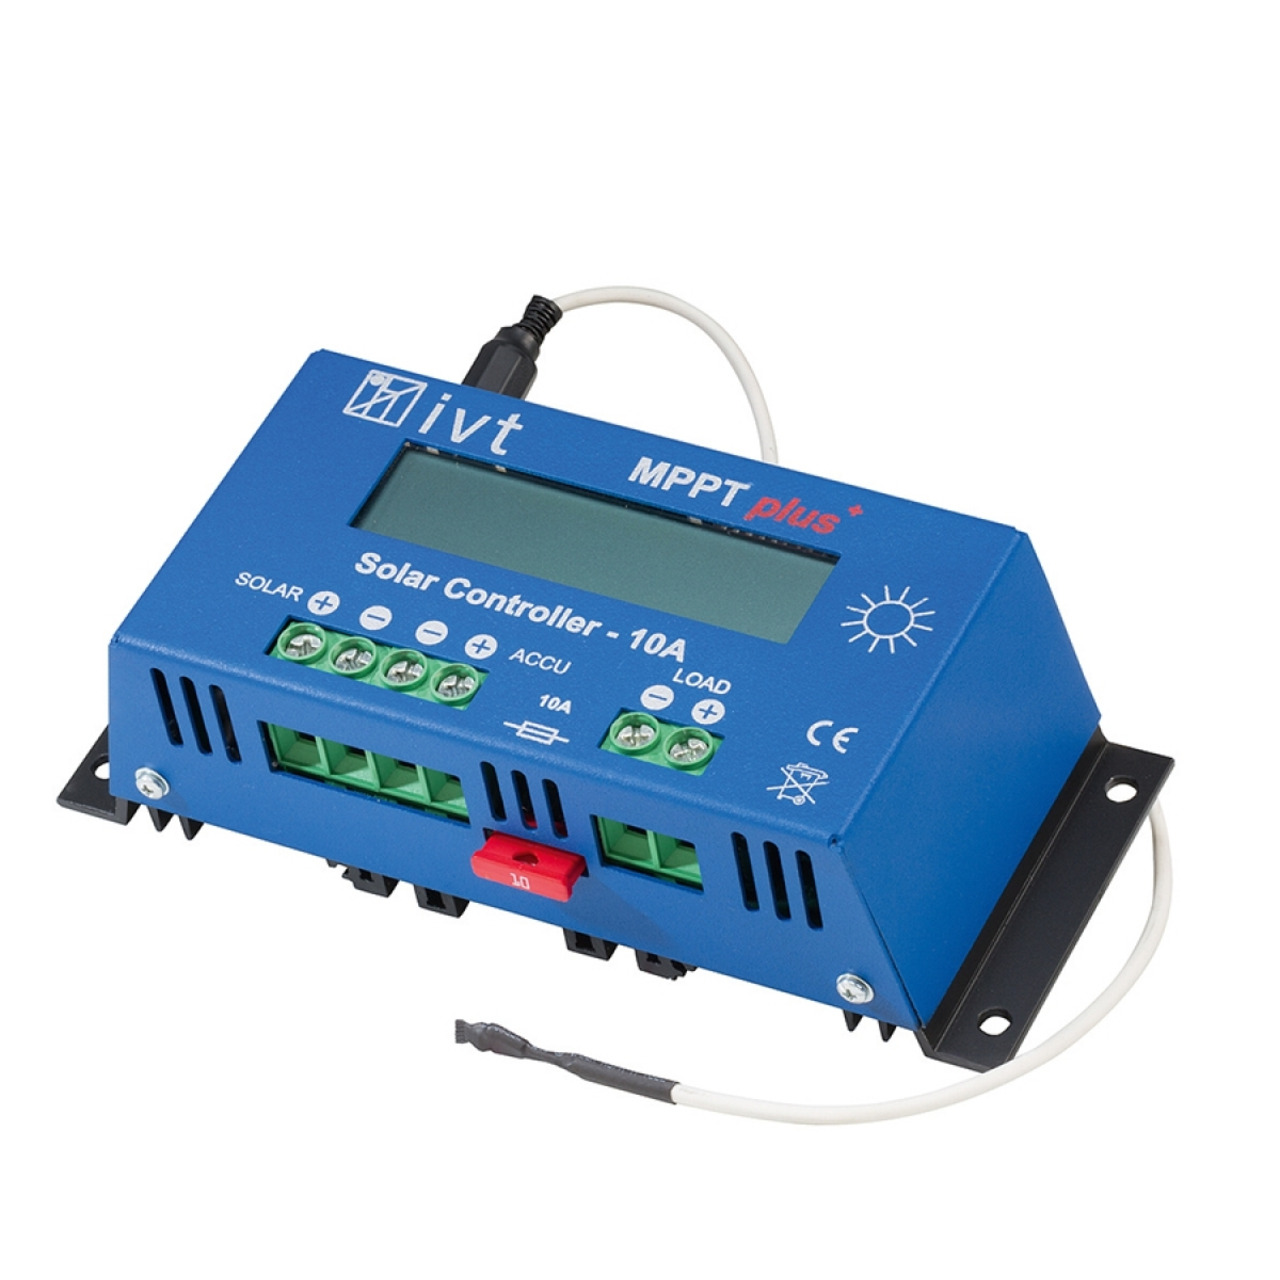 IVT MPPT-Plus Solar Controller 10A unter Stromversorgung